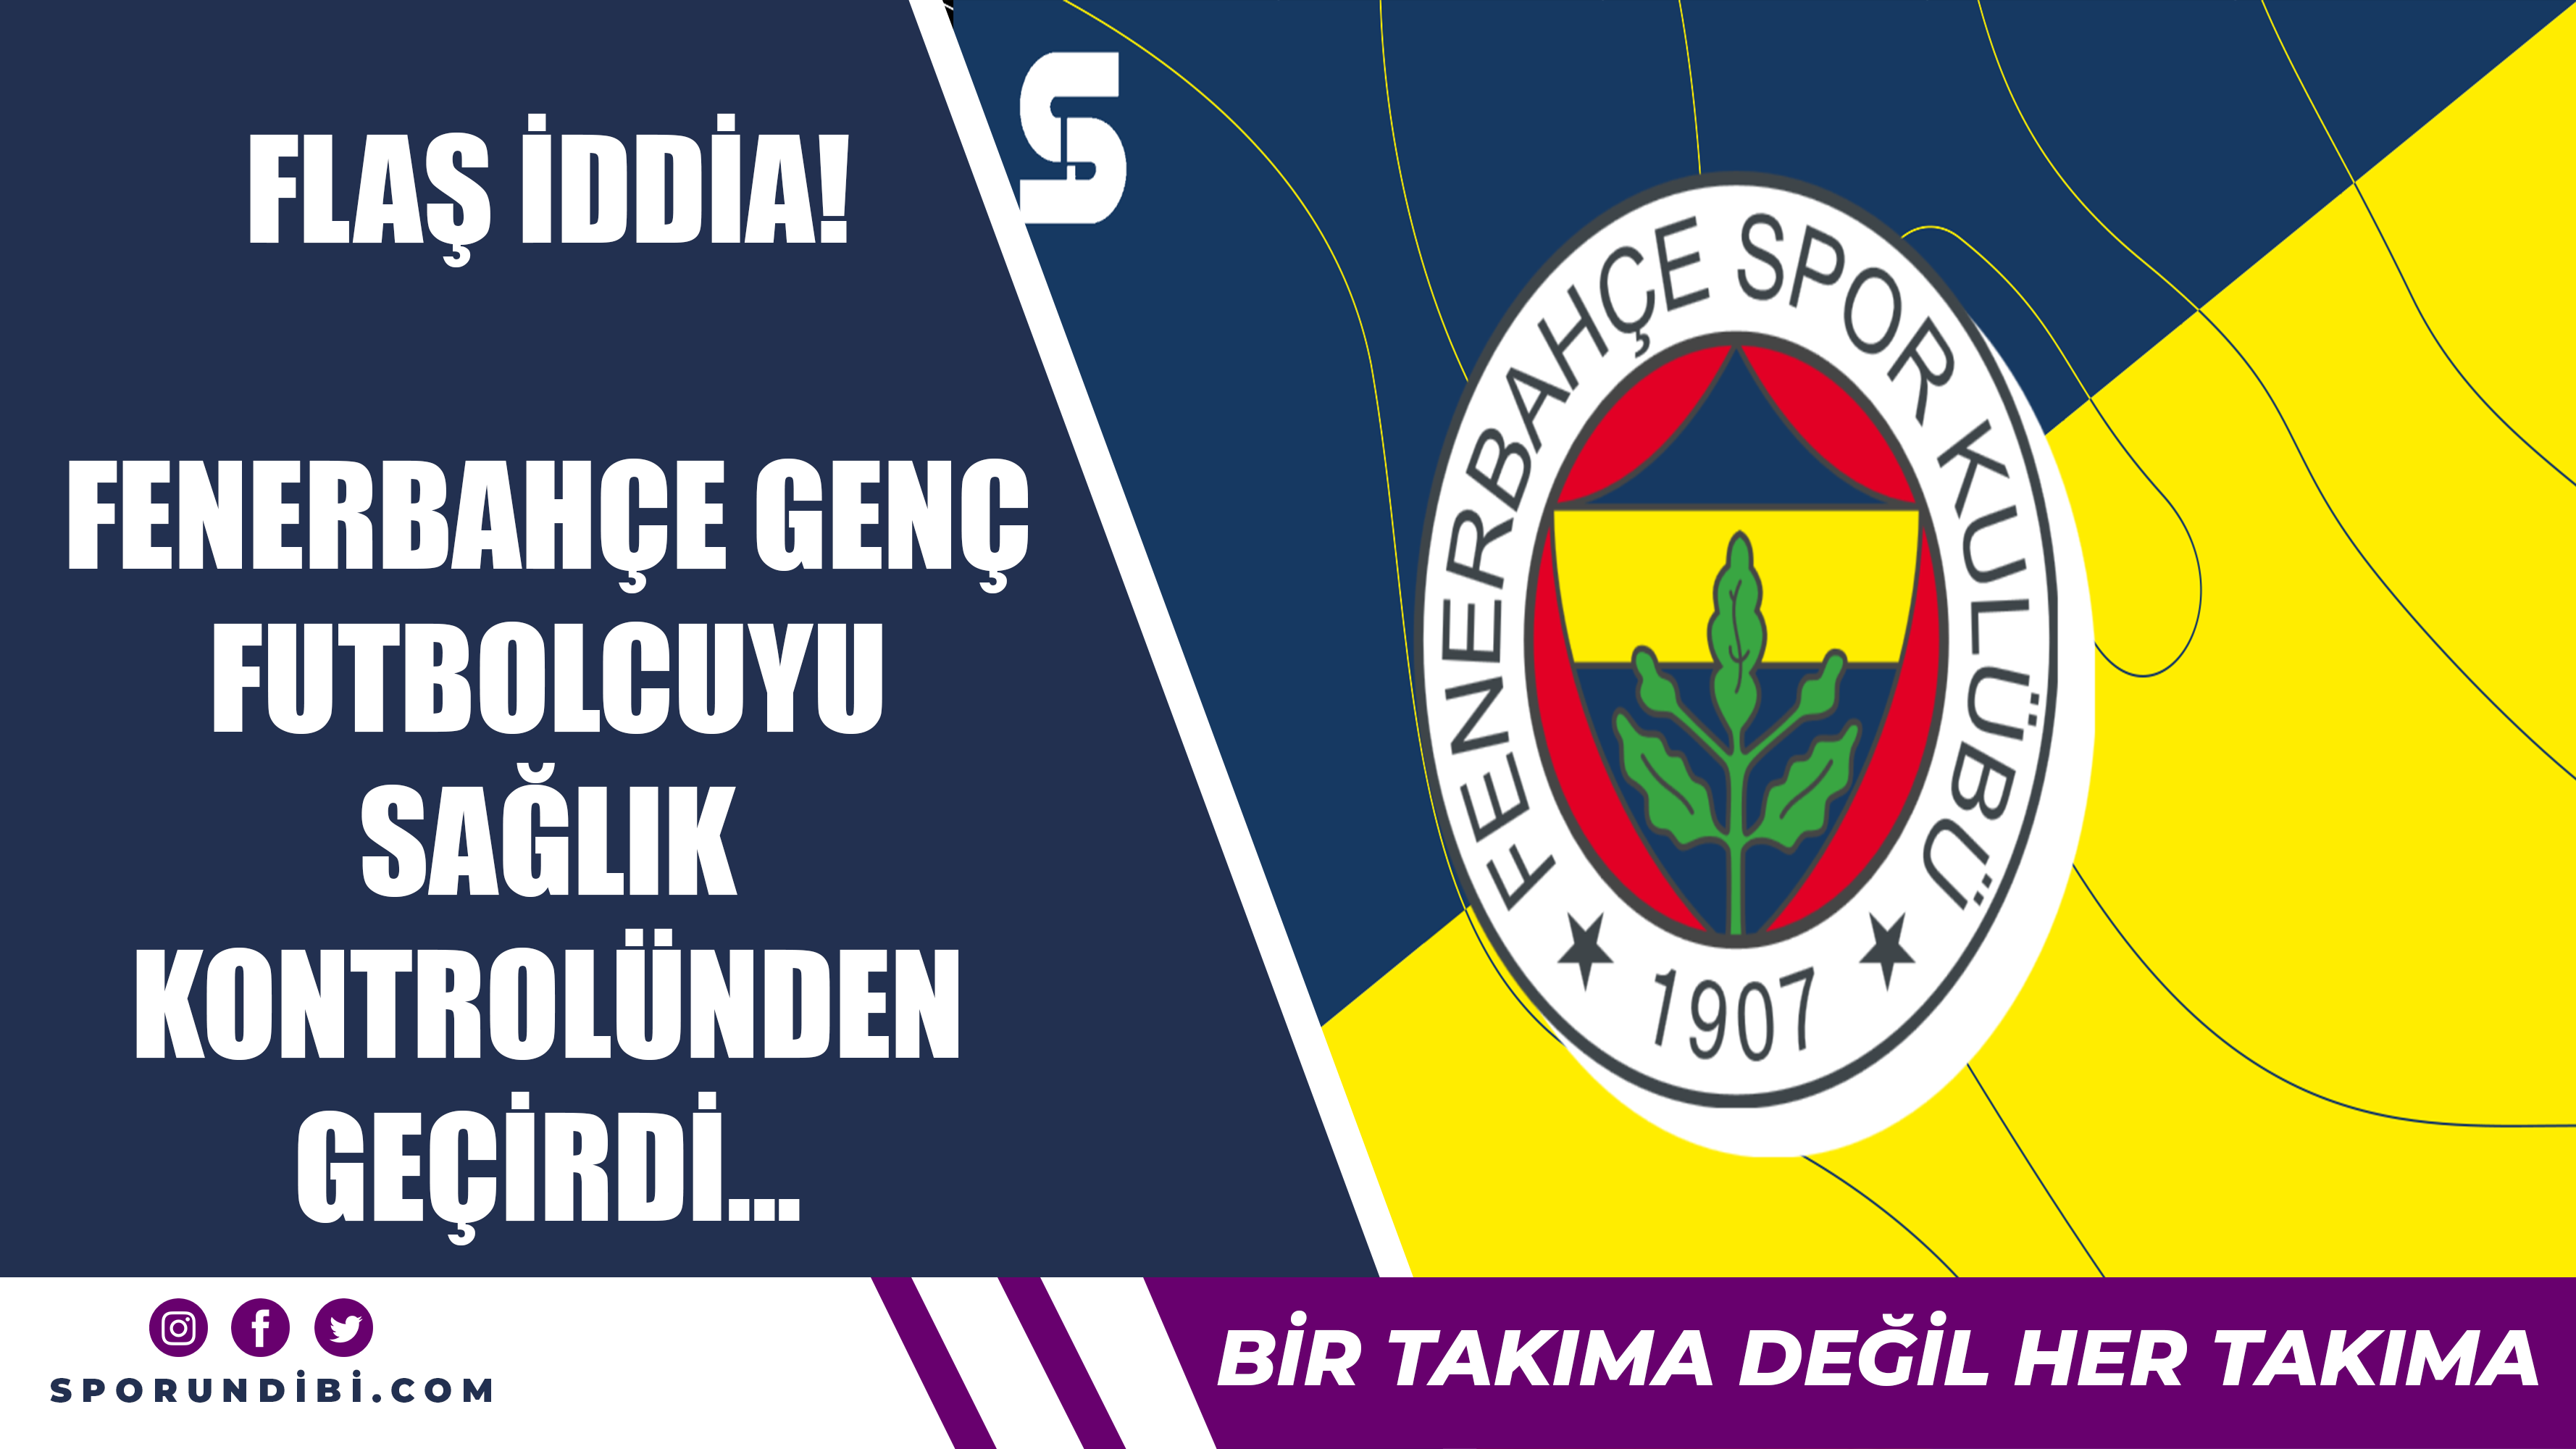 Flaş iddia! Fenerbahçe genç futbolcuyu sağlık kontrolünden geçirdi...